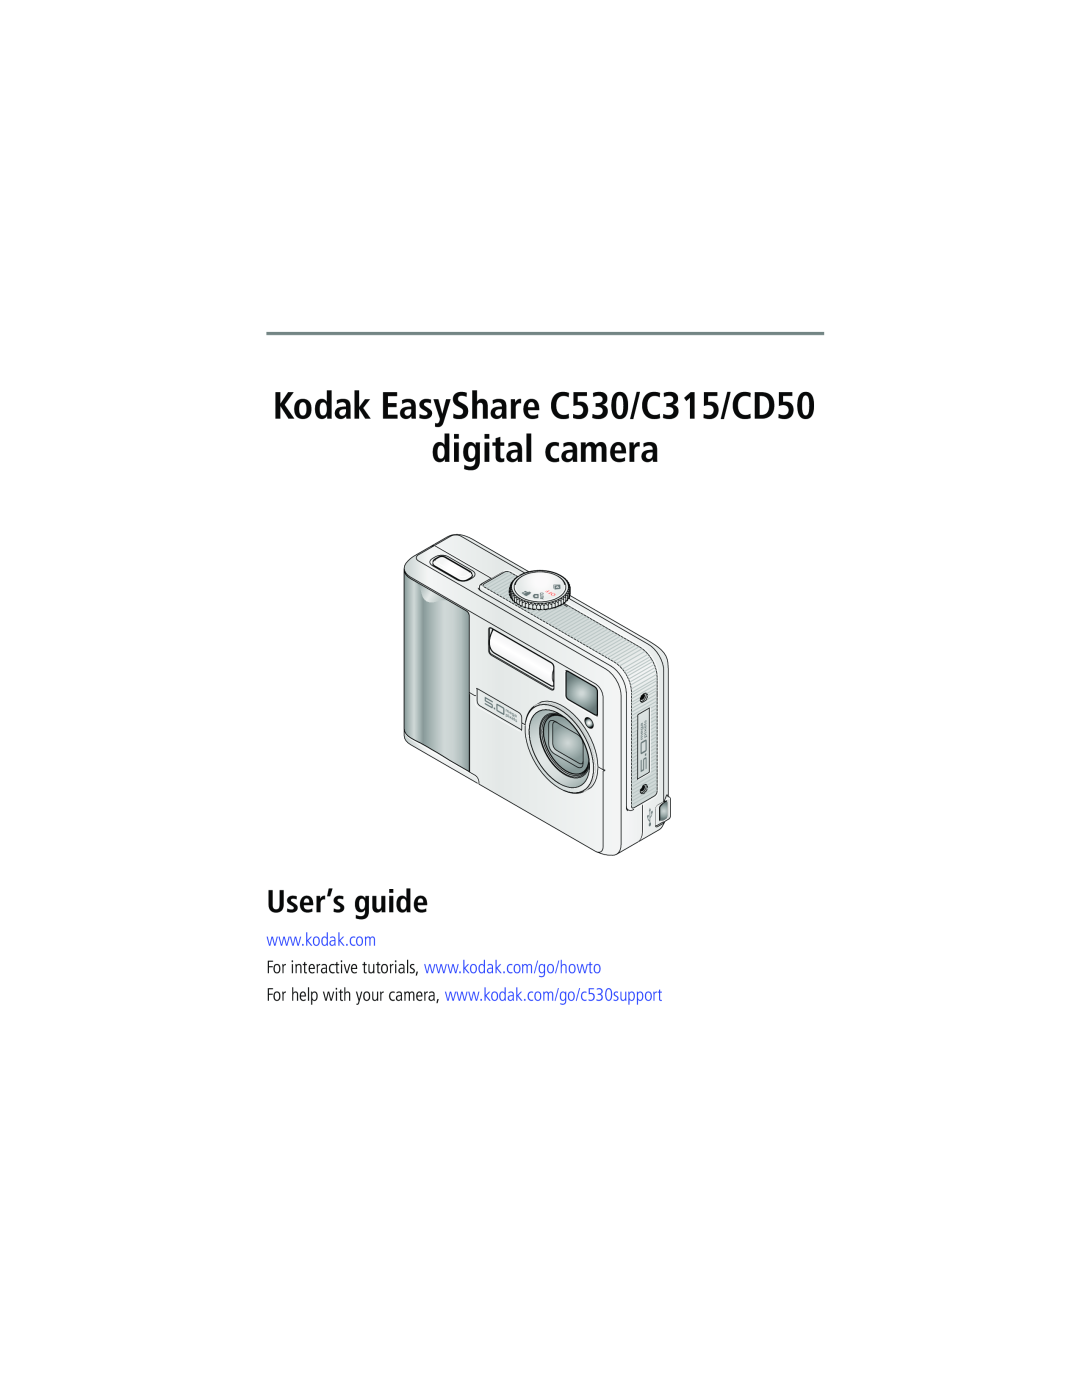 Kodak manual digital camera, User’s guide, Kodak EasyShare C530/C315/CD50 